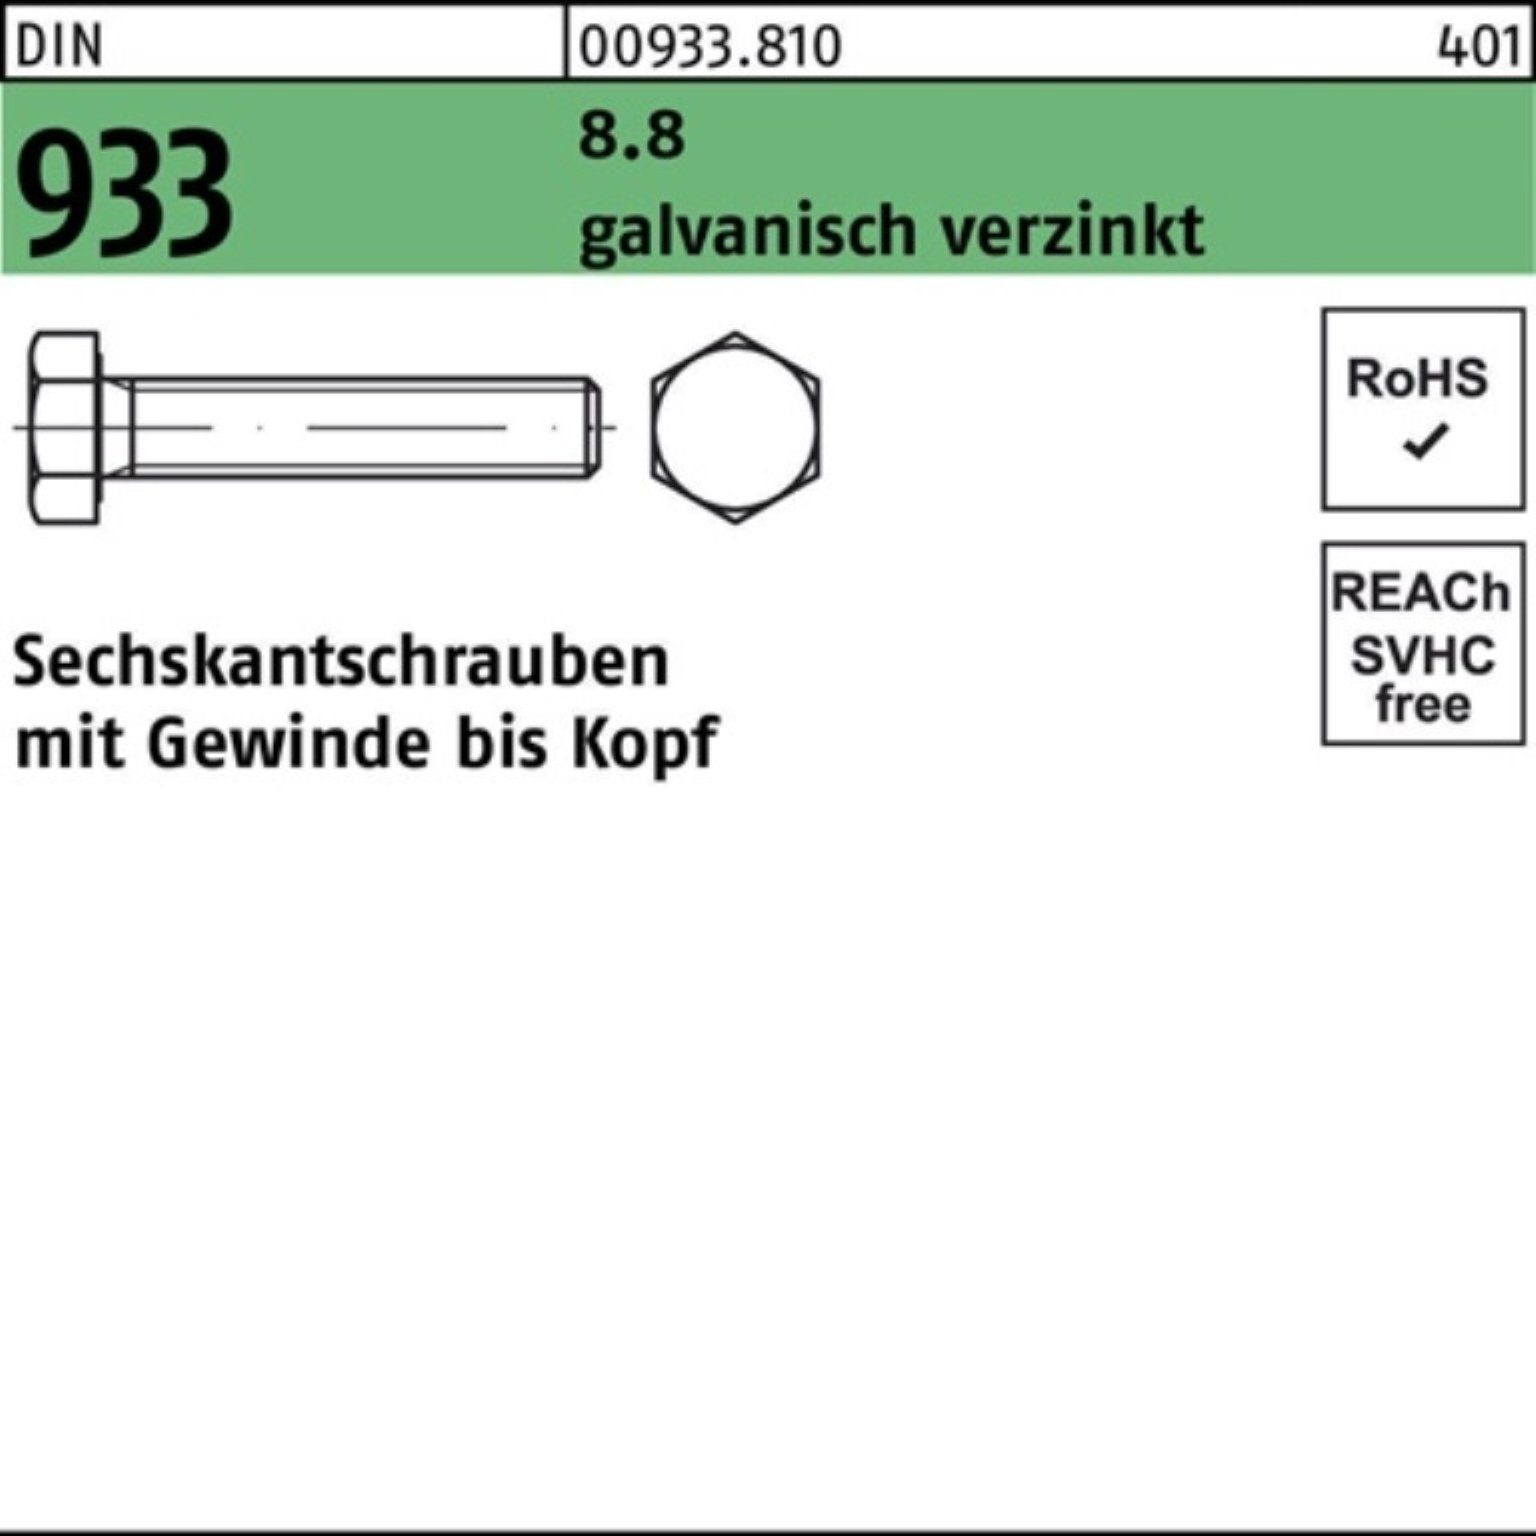 Sechskantschraube 1 Pack DIN M24x Sechskantschraube VG 8.8 galv.verz. 300 100er Reyher Stü 933